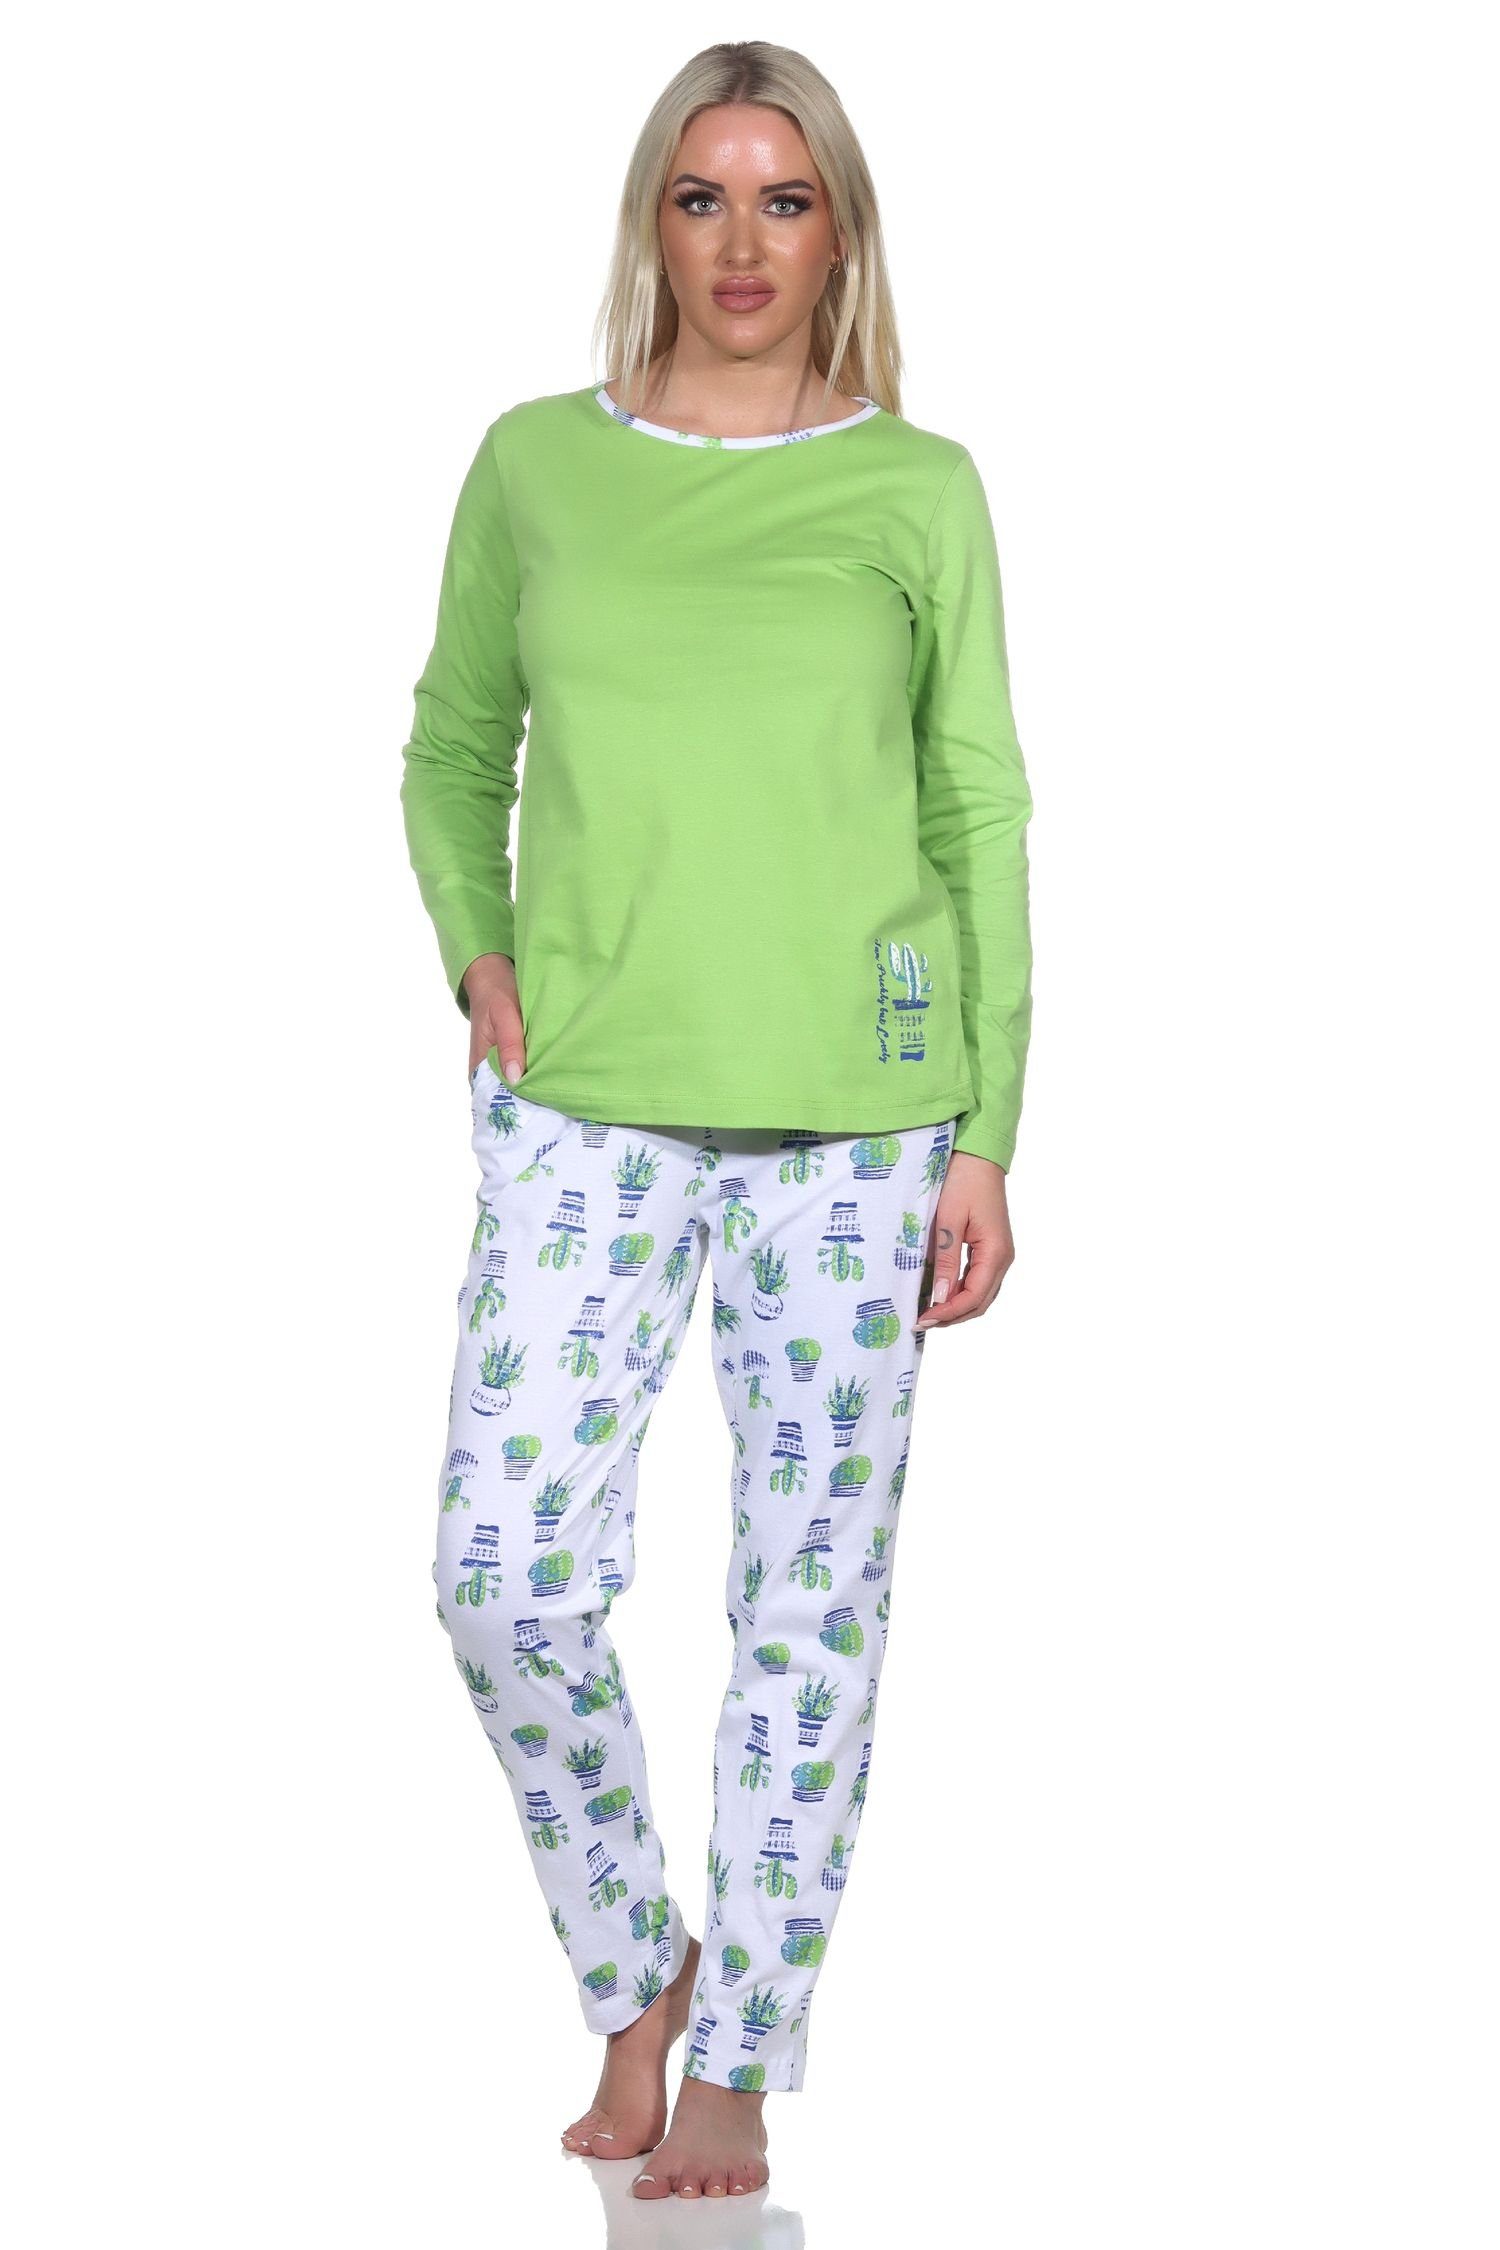 Normann Pyjama Damen Schlafanzug Lang, Oberteil mit Kaktus als Motiv, Hose bedruckt grün